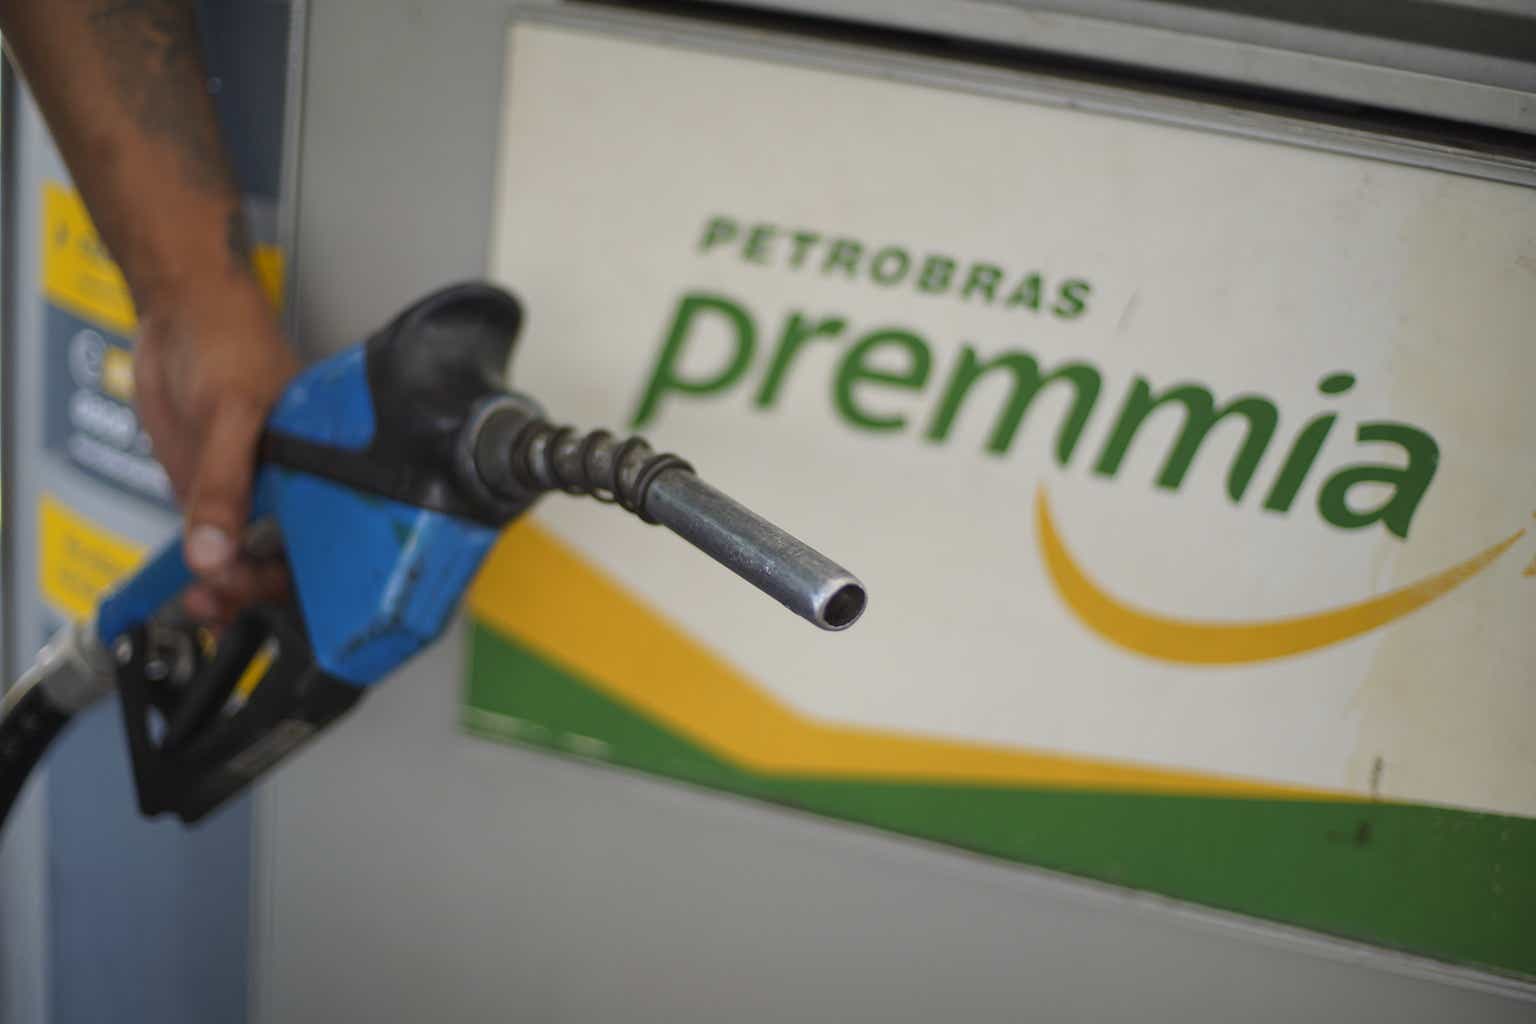 Petrobras, investors discuss recovery of Brazilian refinery in